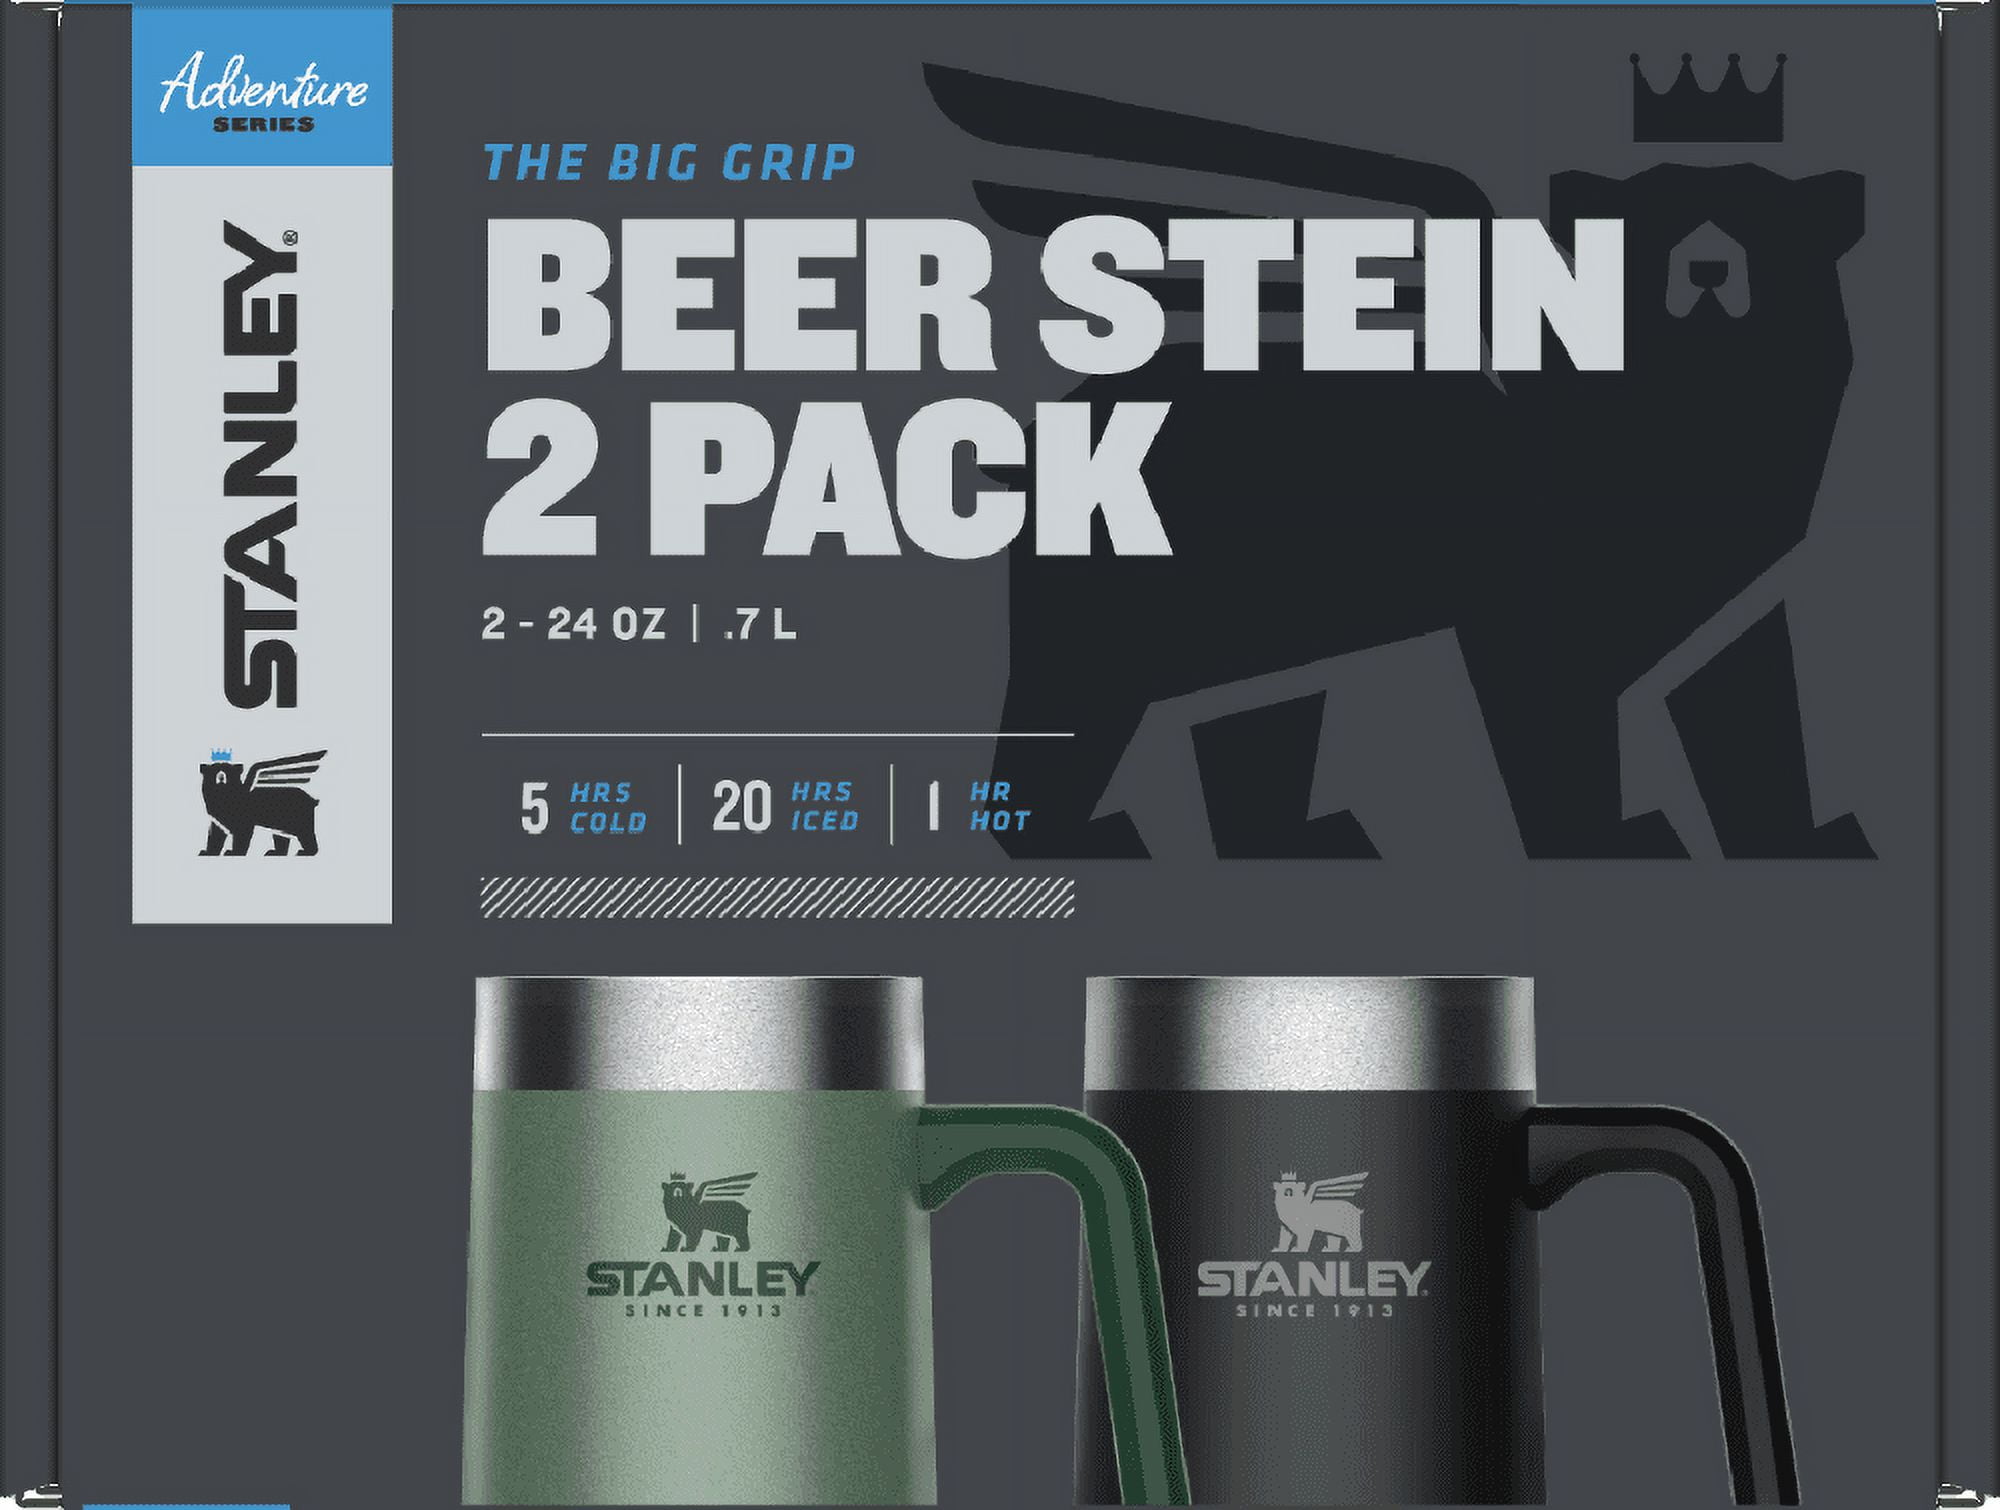 Stanley The Big Grip Beer Stein 10-02874-033 Hammertone Green